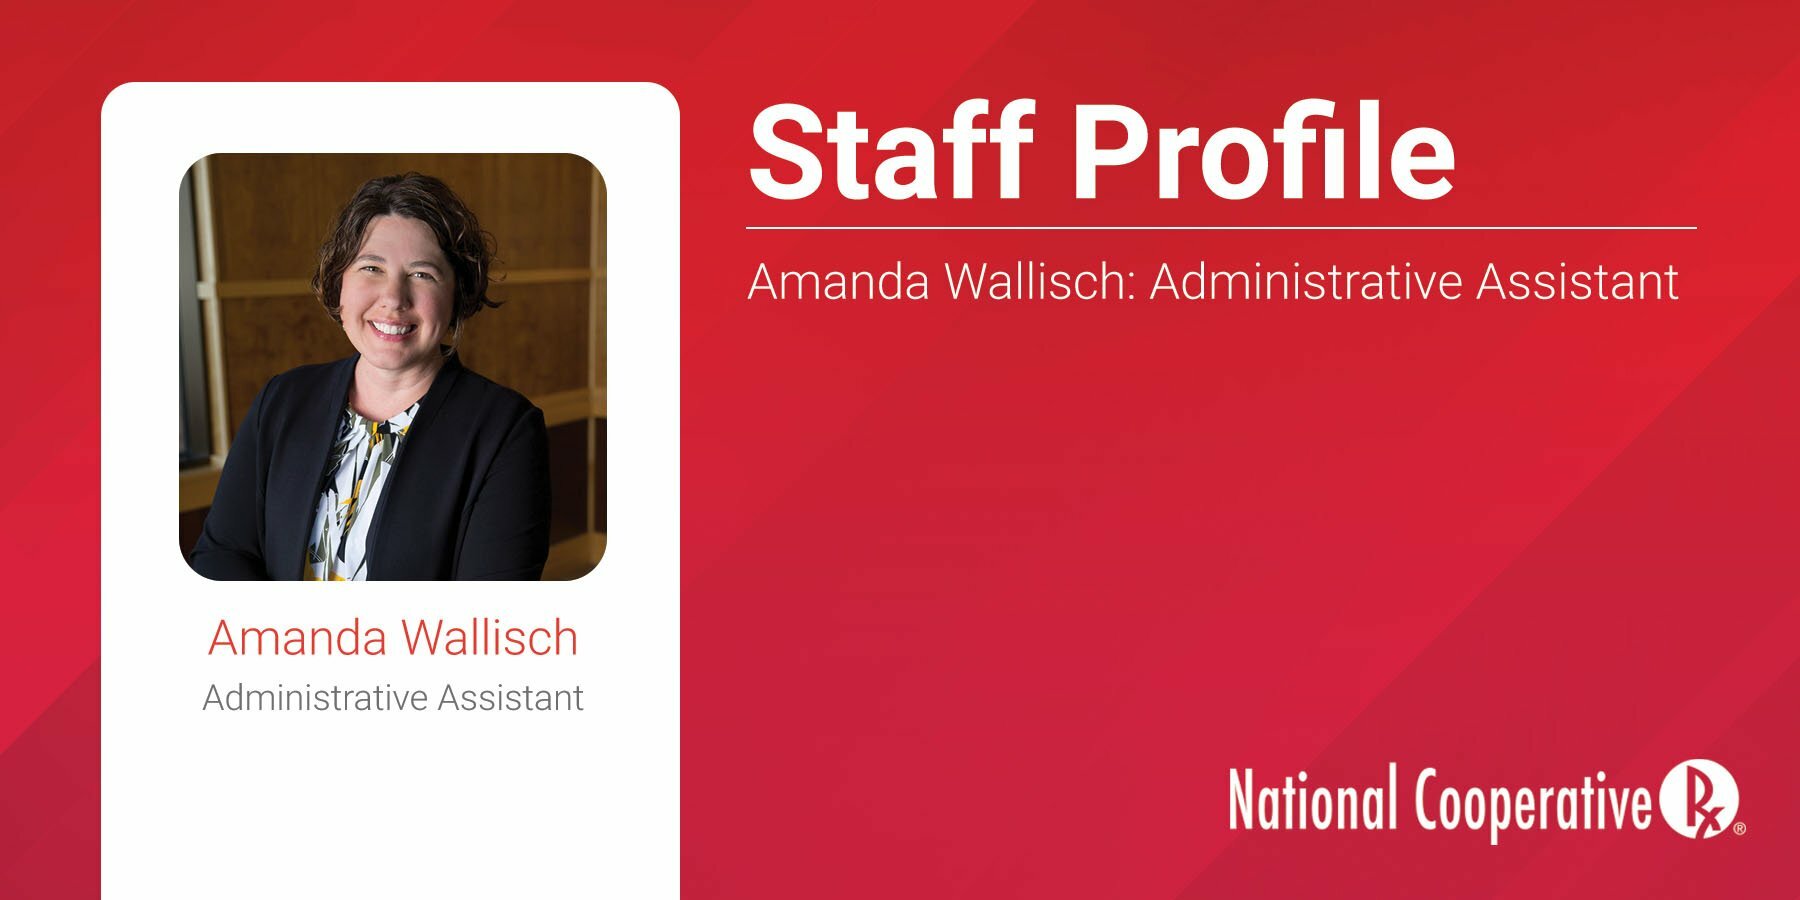 Staff Profile: Amanda Wallisch